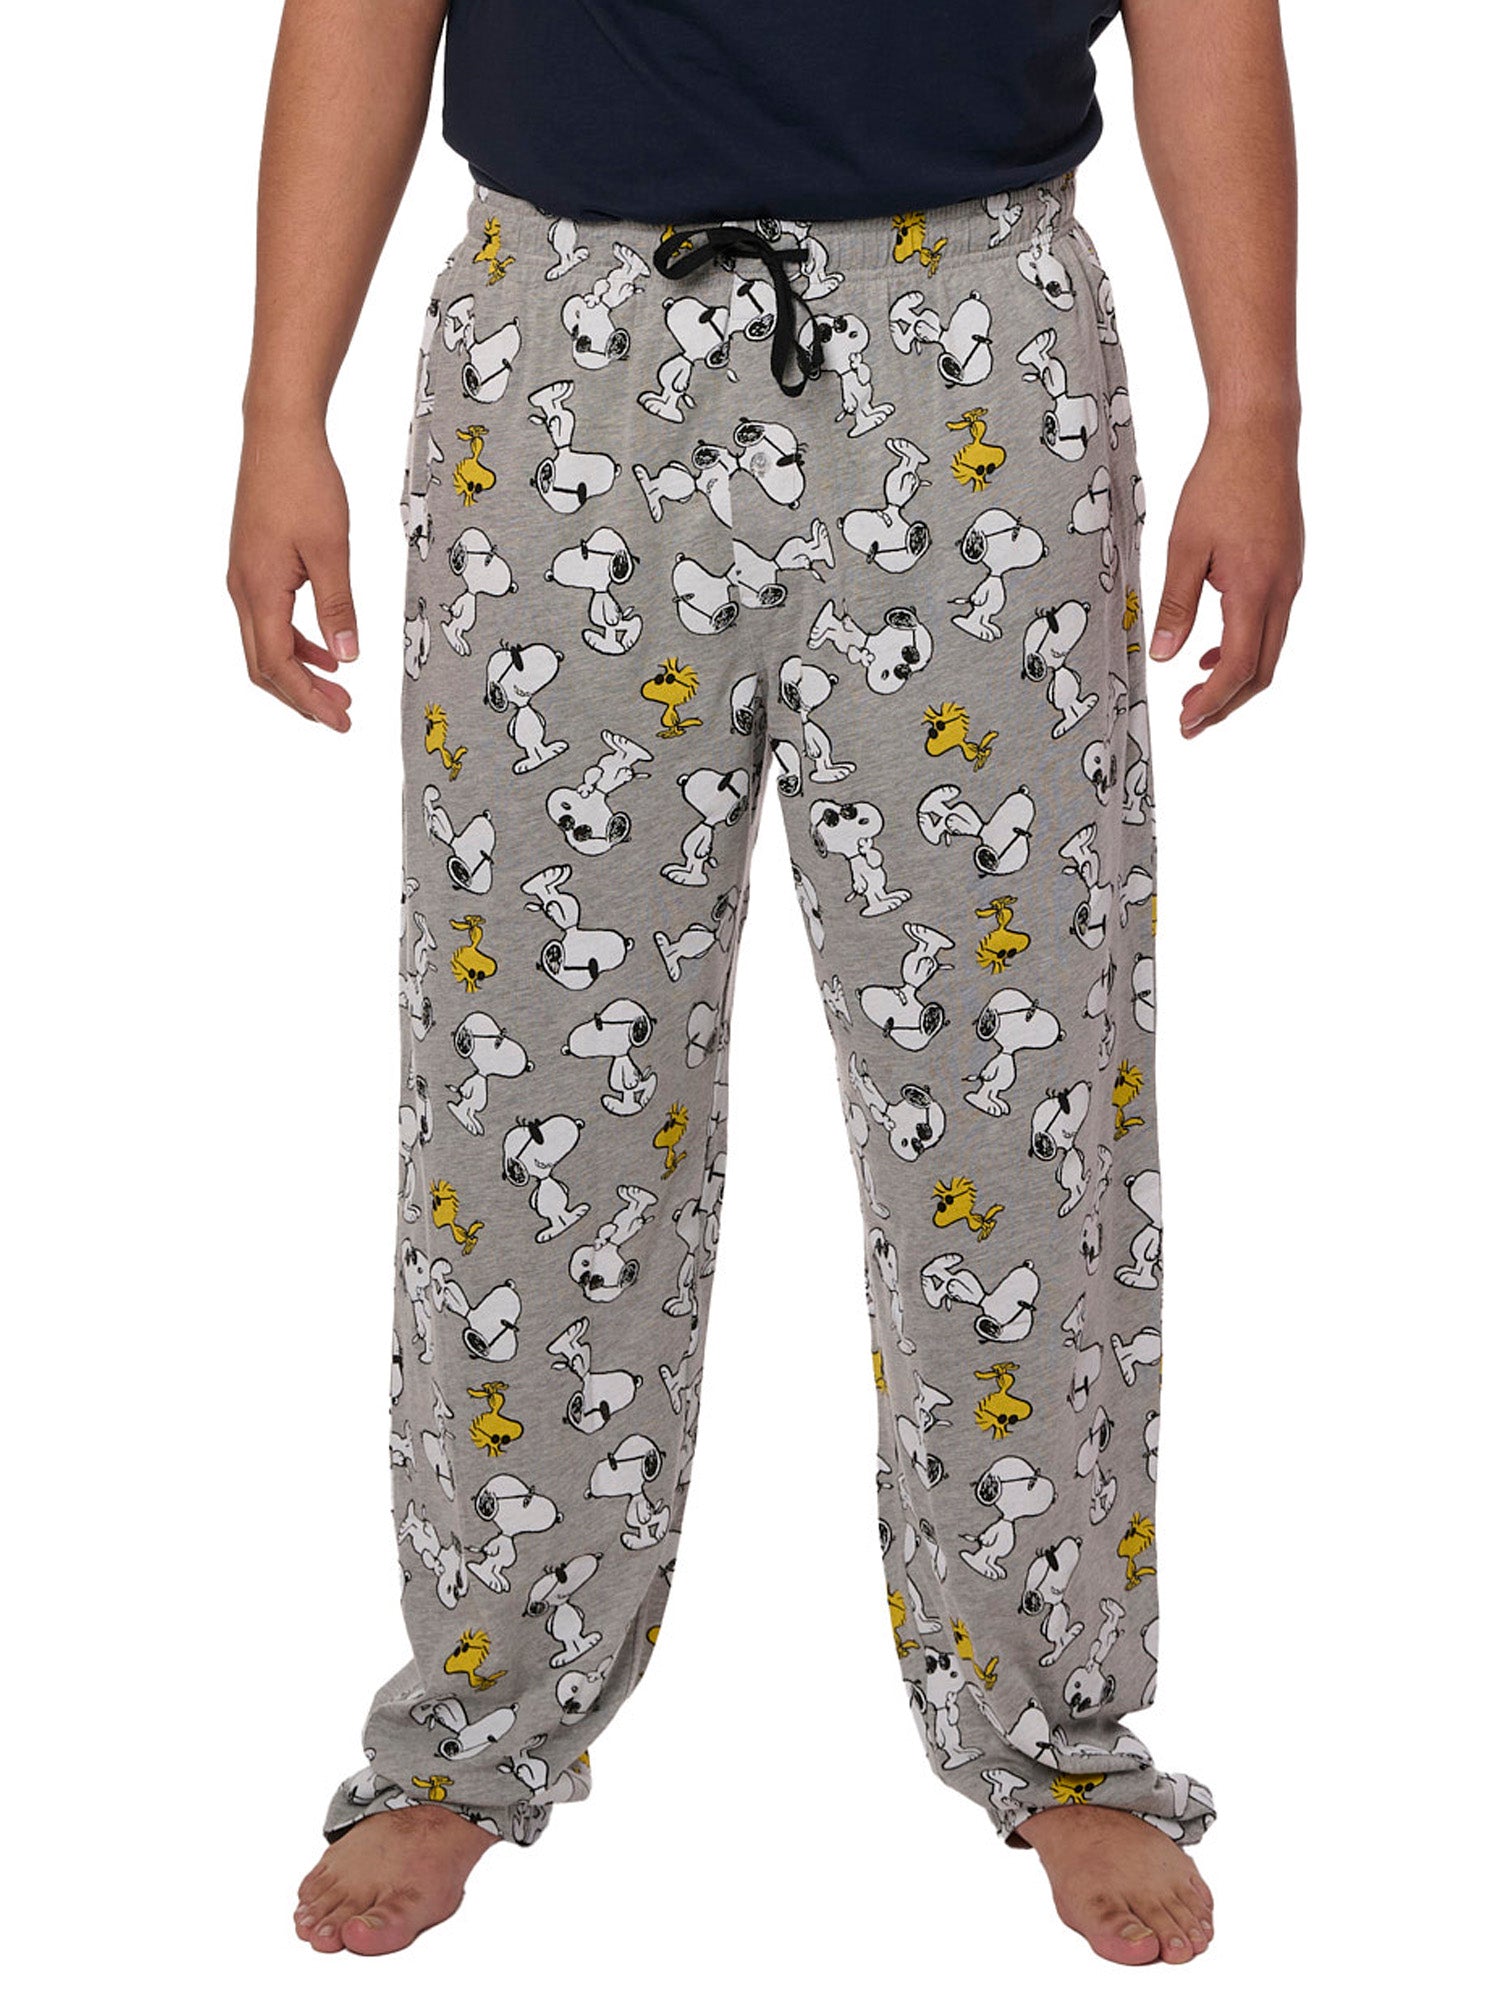 Men's Peanuts Snoopy Pajama Pants Lounge Wear Woodstock Gray